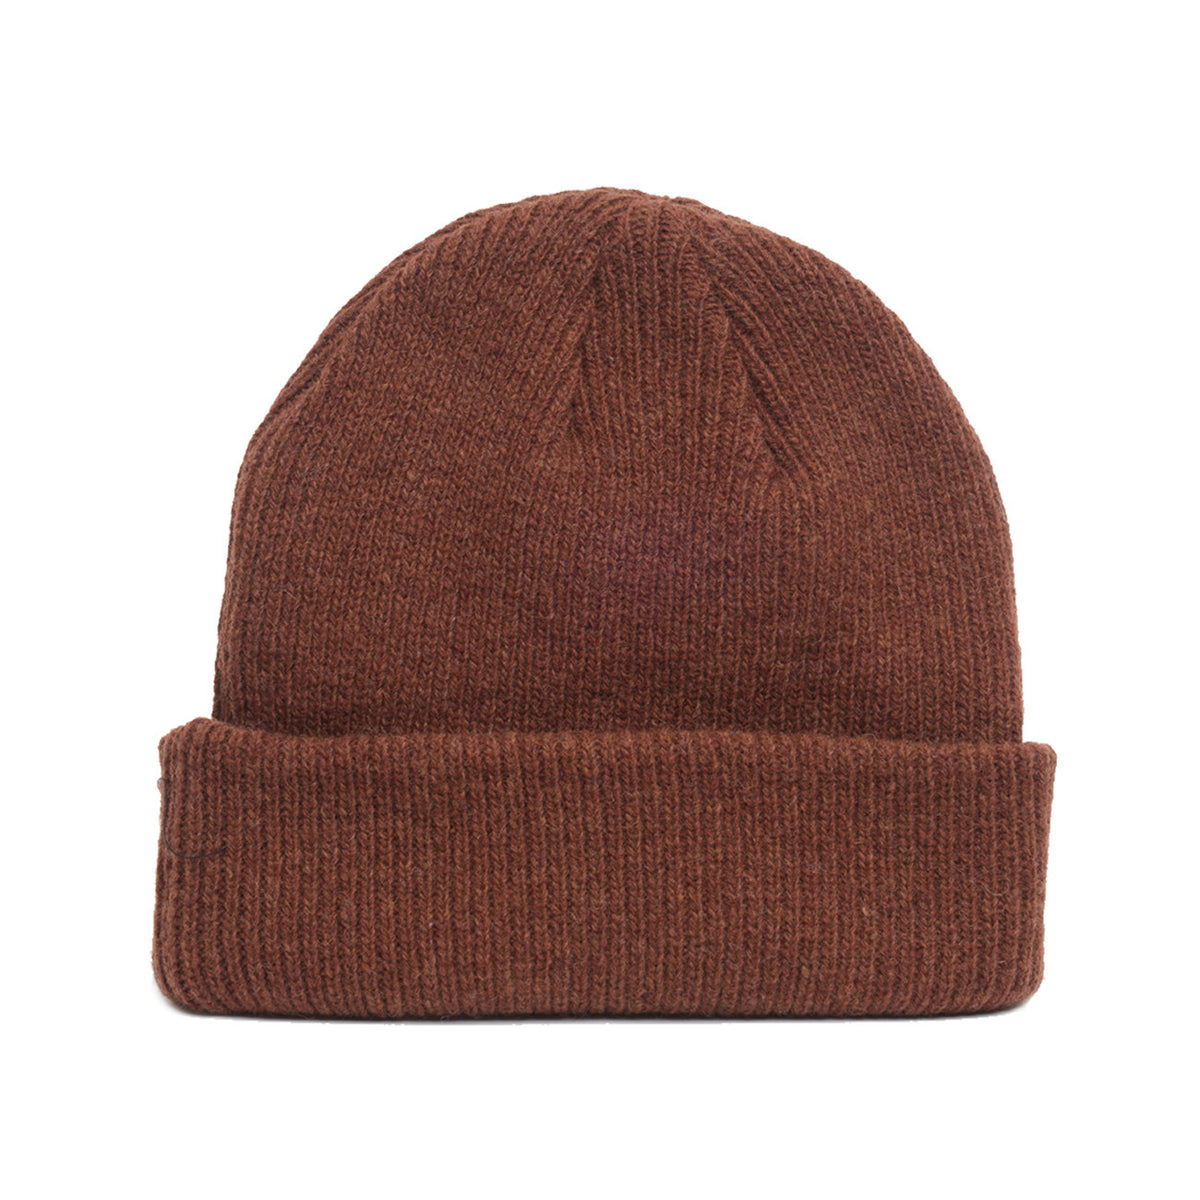 brown beanie hat